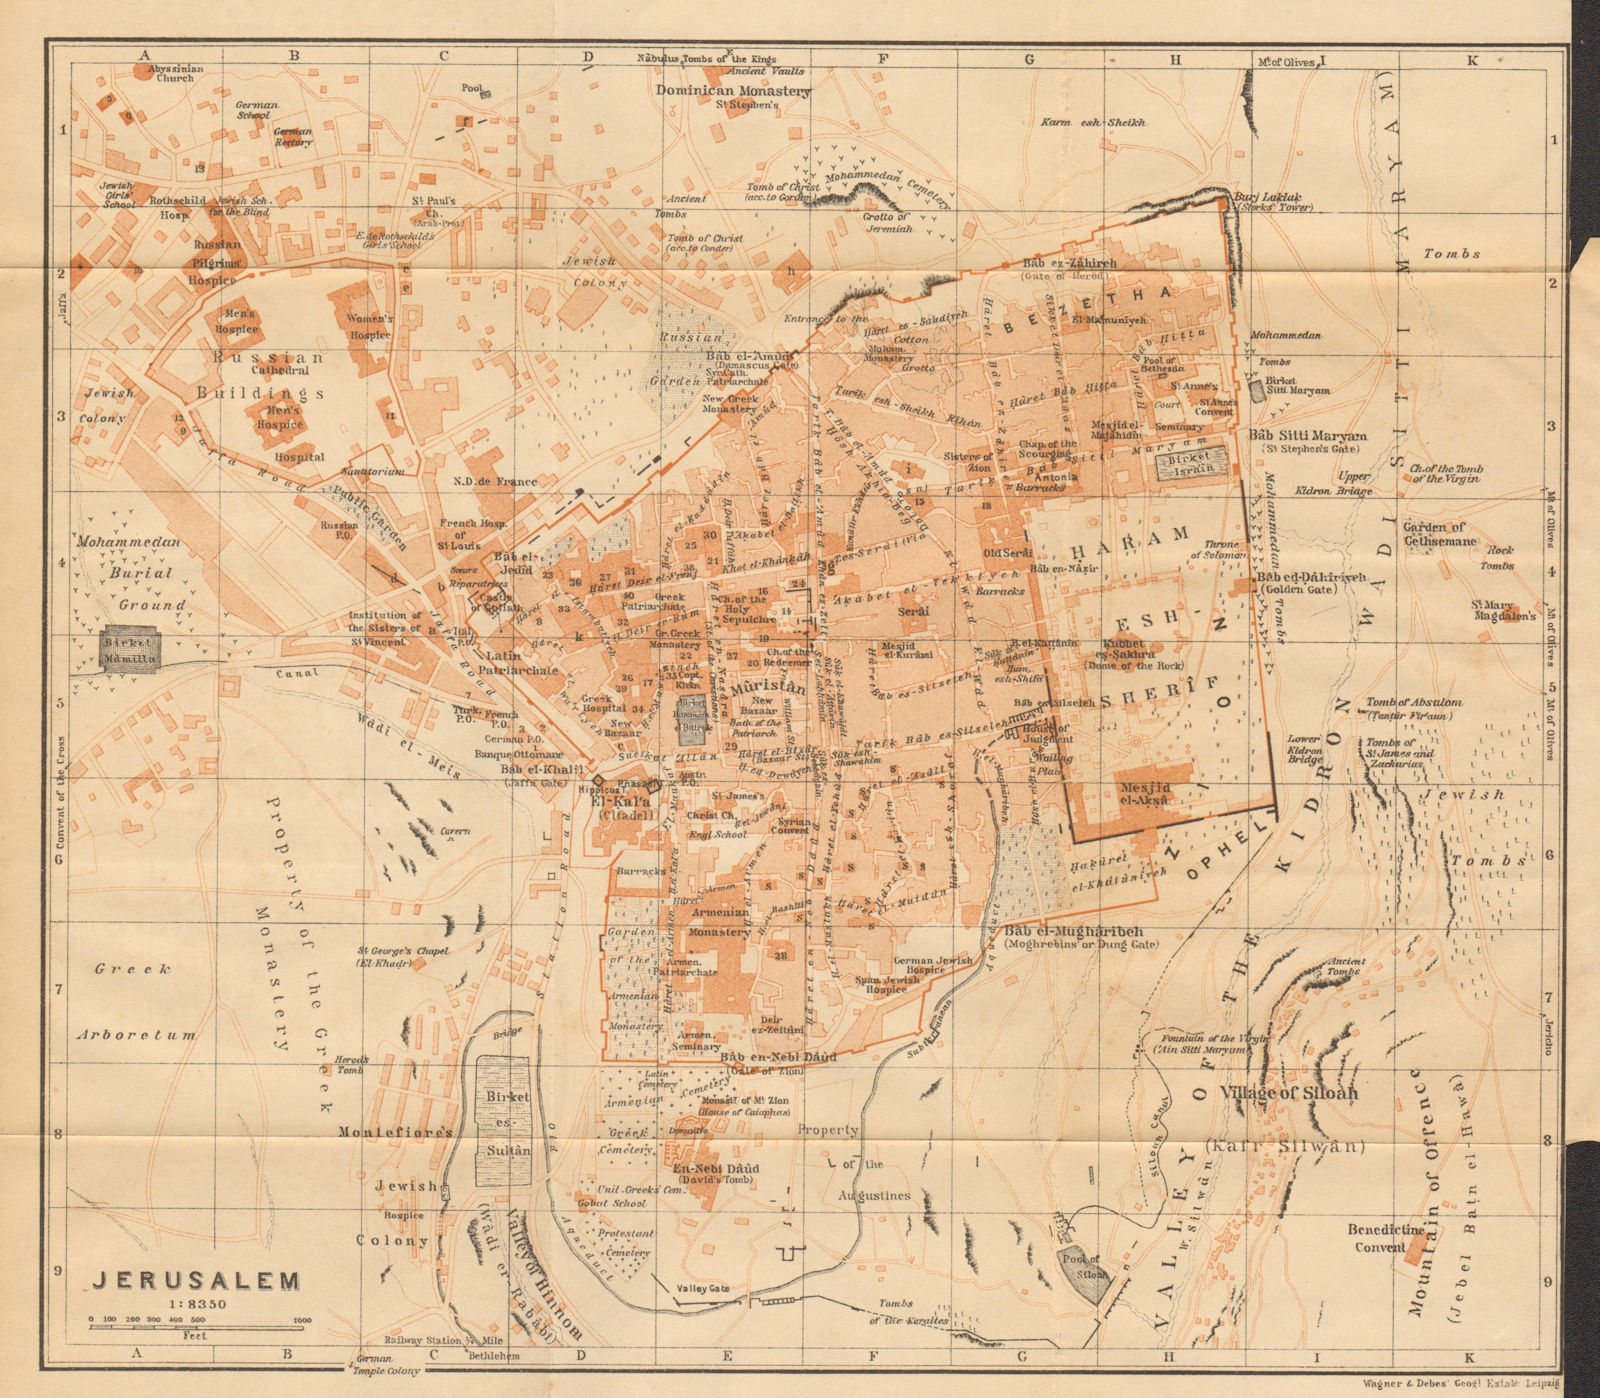 Associate Product Jerusalem antique town city plan. Israel 1912 old map chart